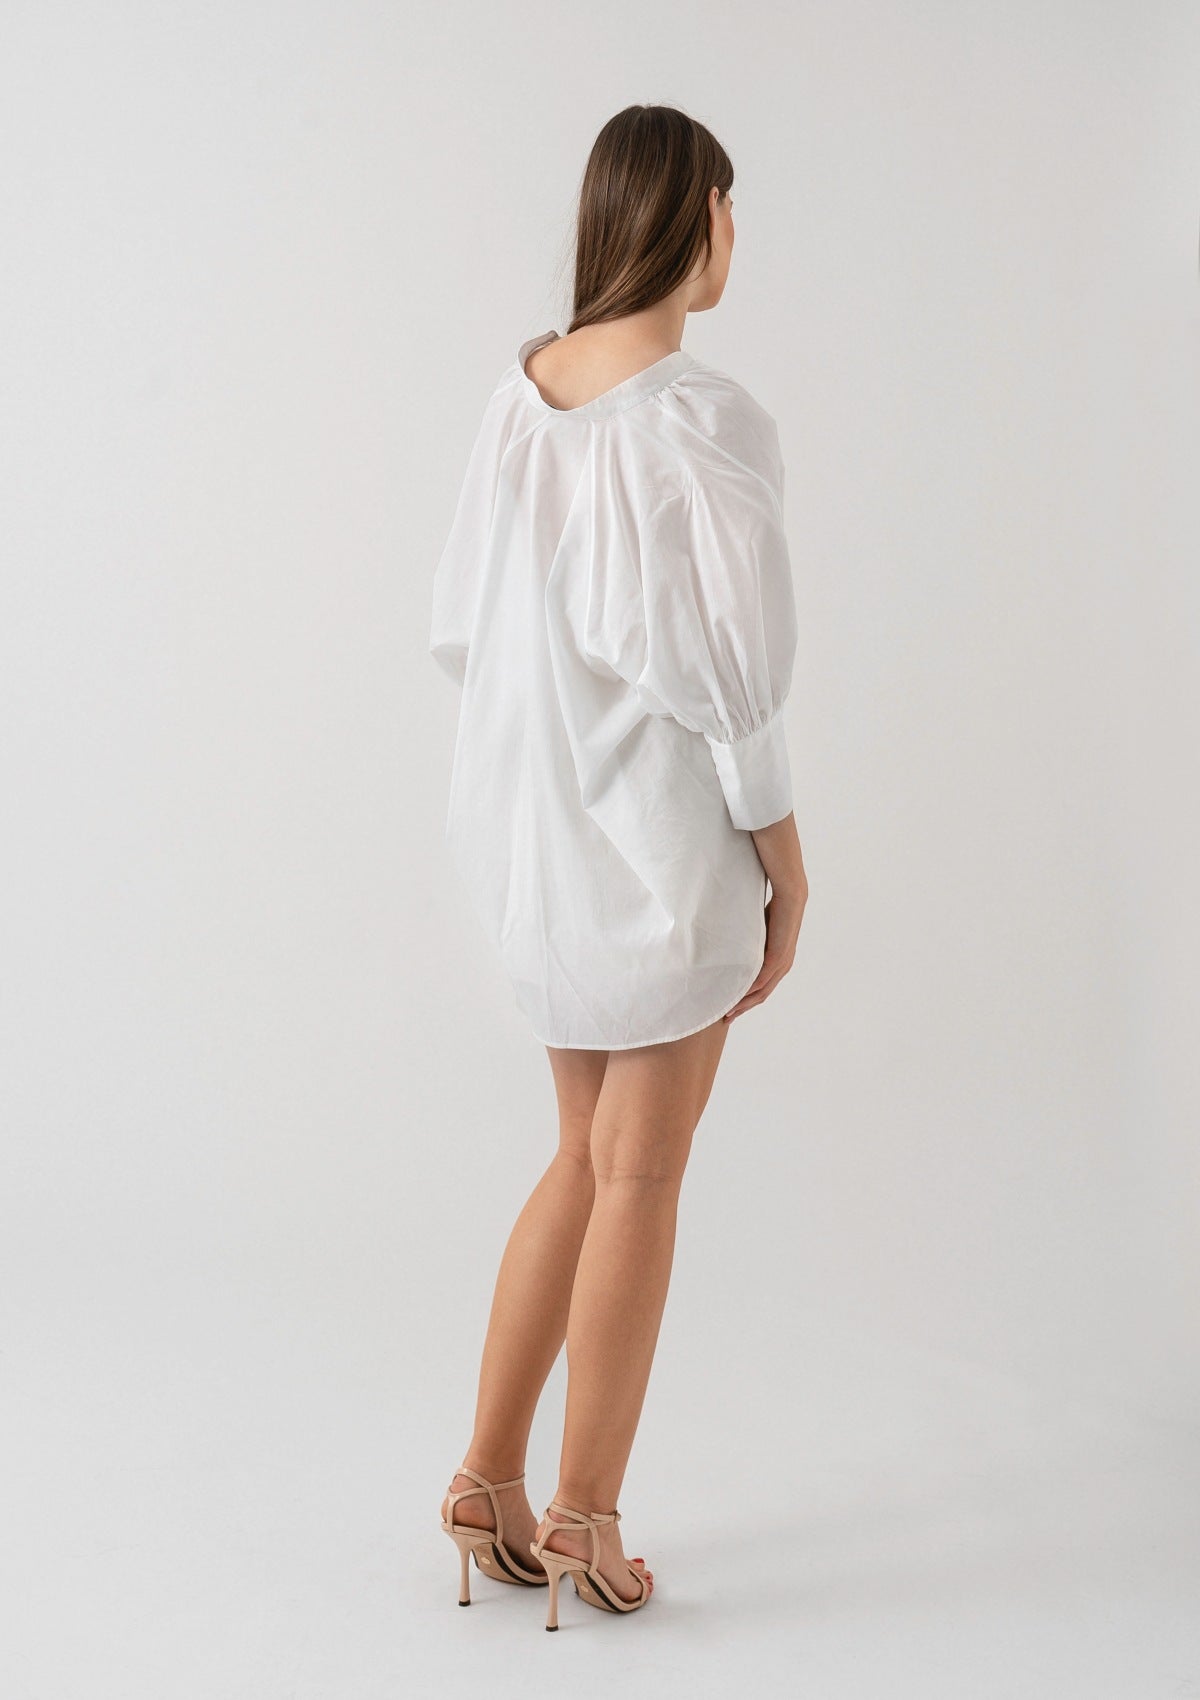 white-cotton-shirt-no buttons-by Silk & tonic